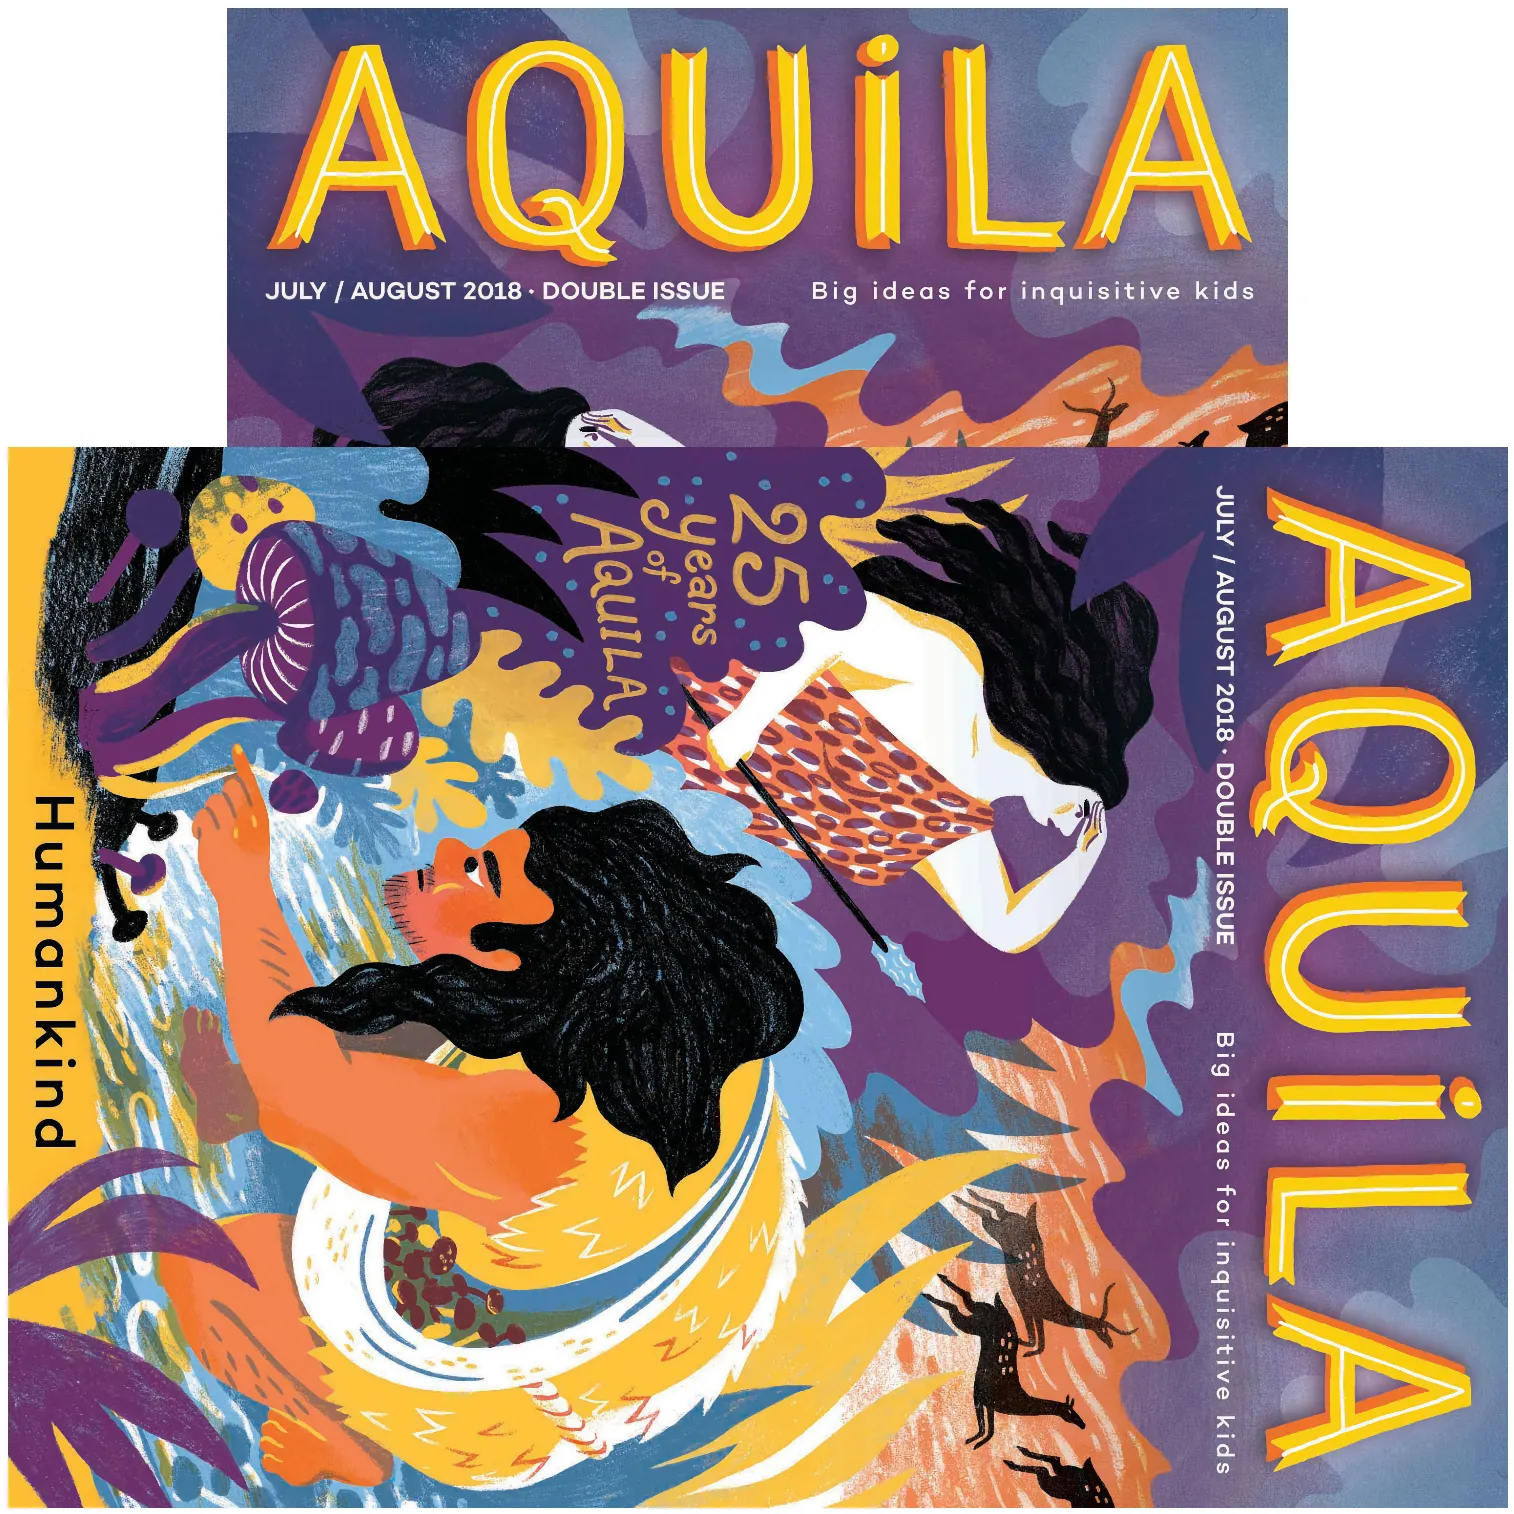 Free AQUILA Summer Double Issue magazine